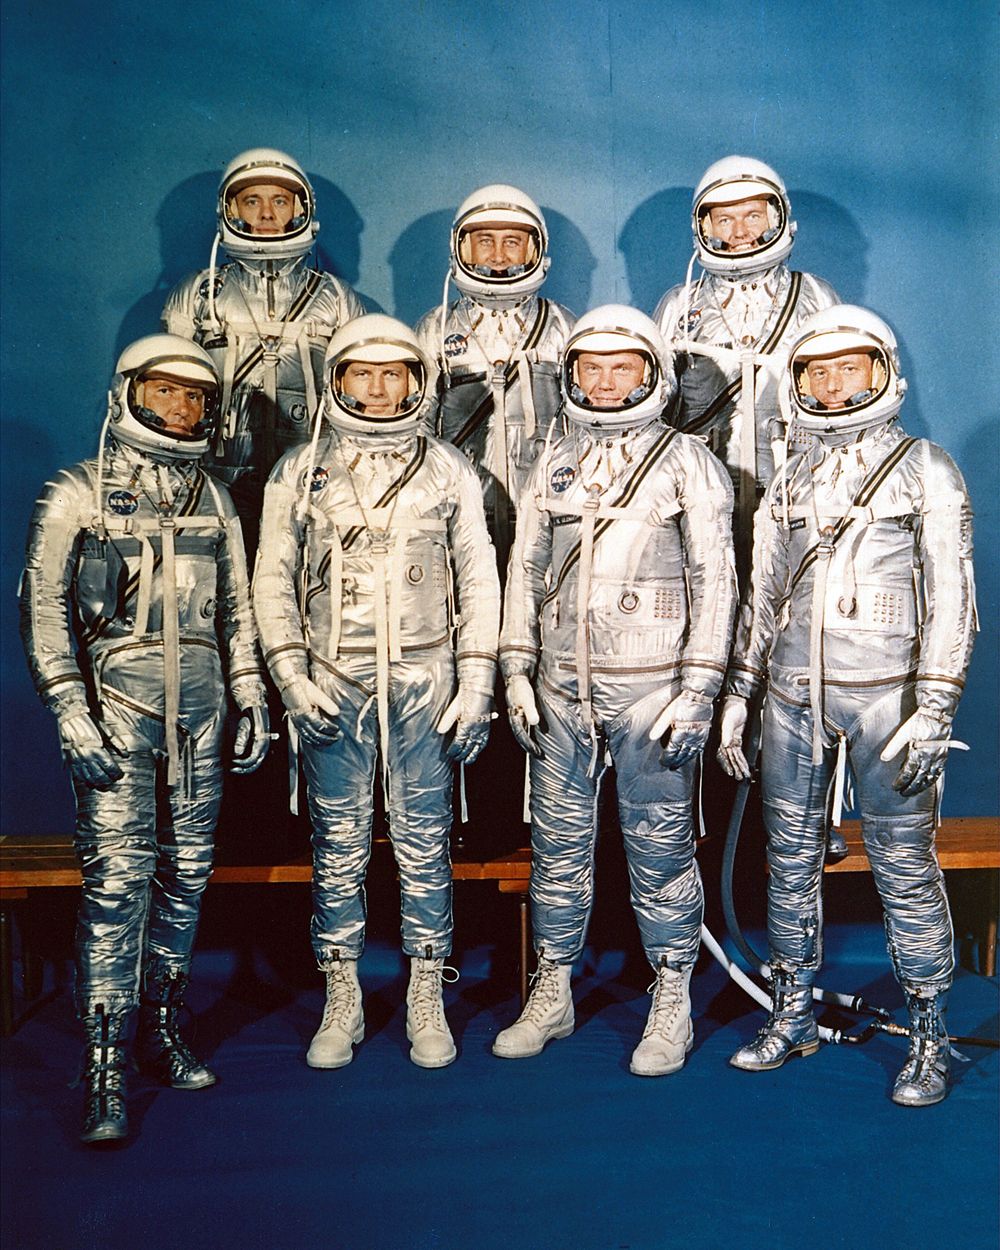 The Mercury 7 Astronauts: NASA's First Space Travelers